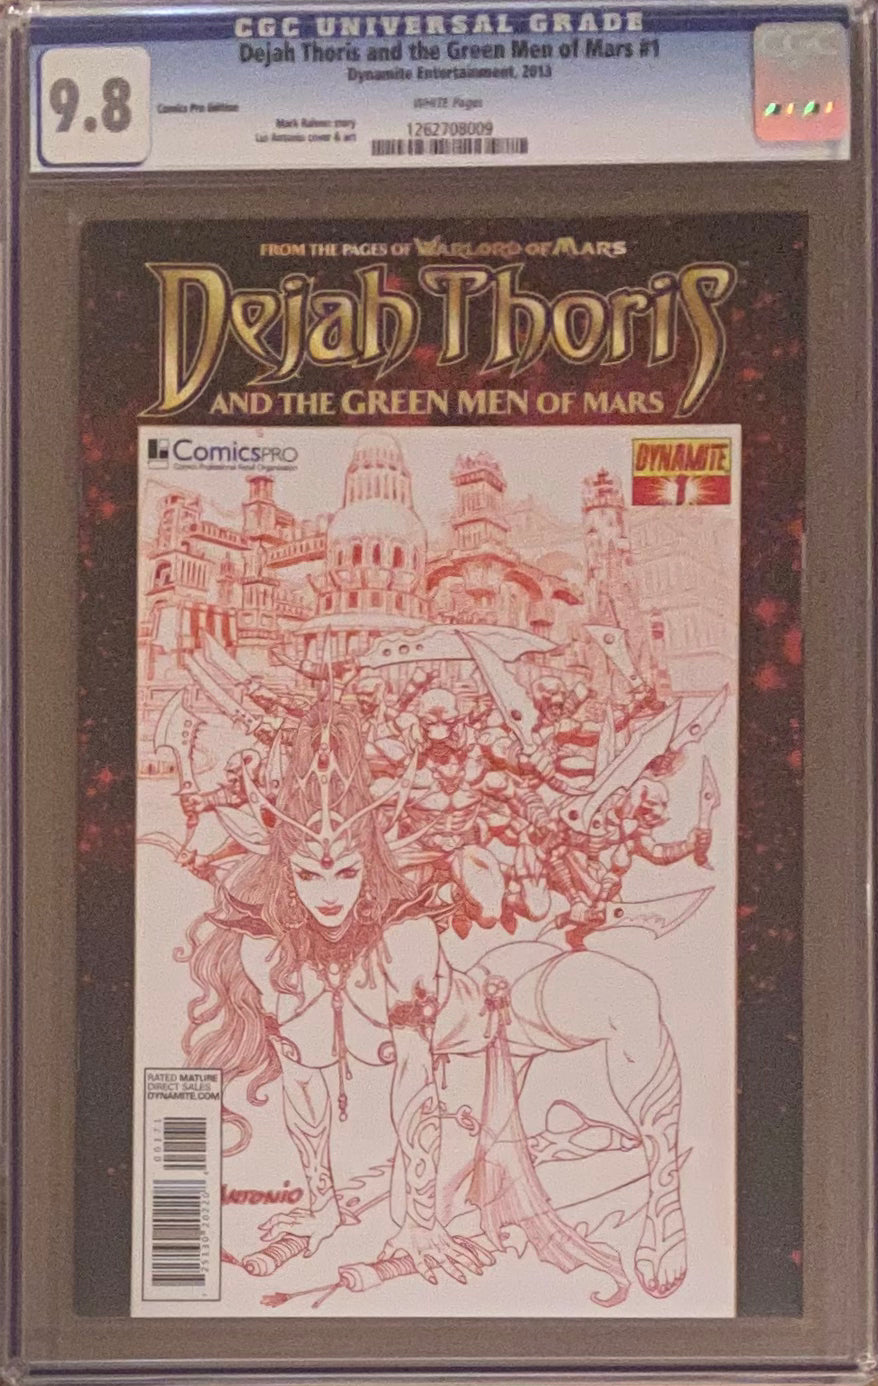 Dejah Thoris and the Green Men of Mars #1 Comics Pro Edition CGC 9.8